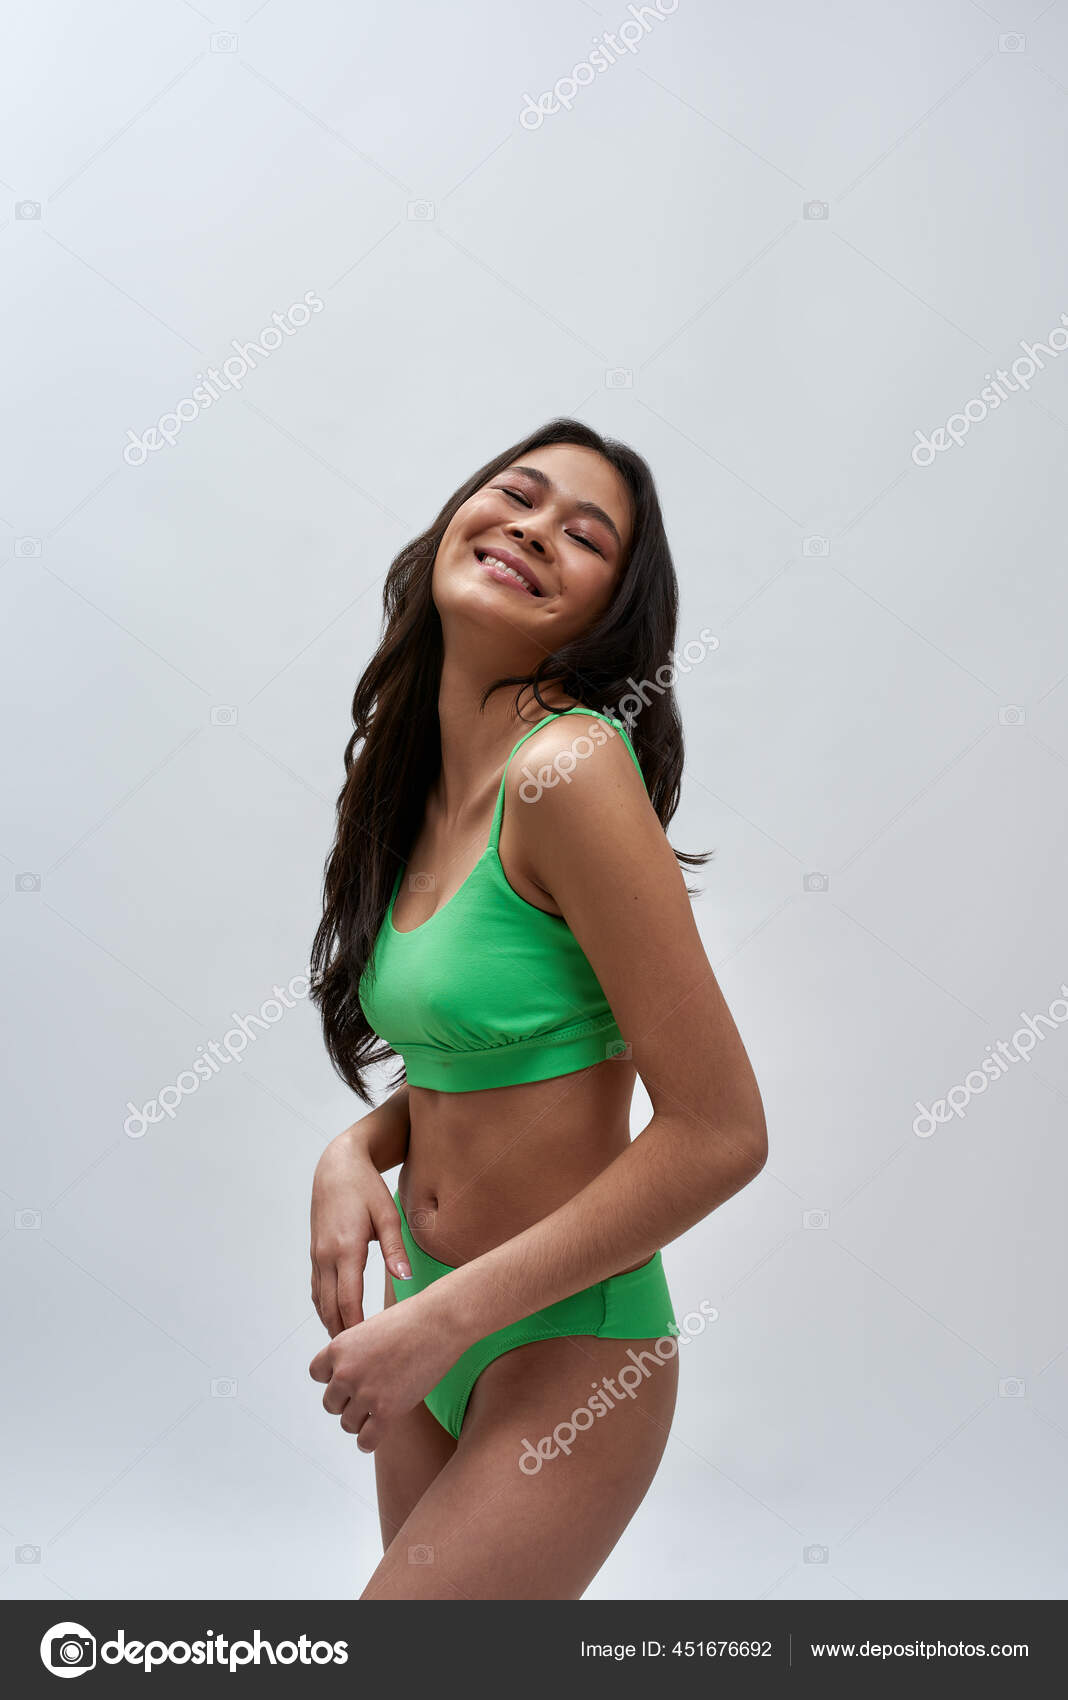 Beautiful curvy young female model wearing yellow underwear